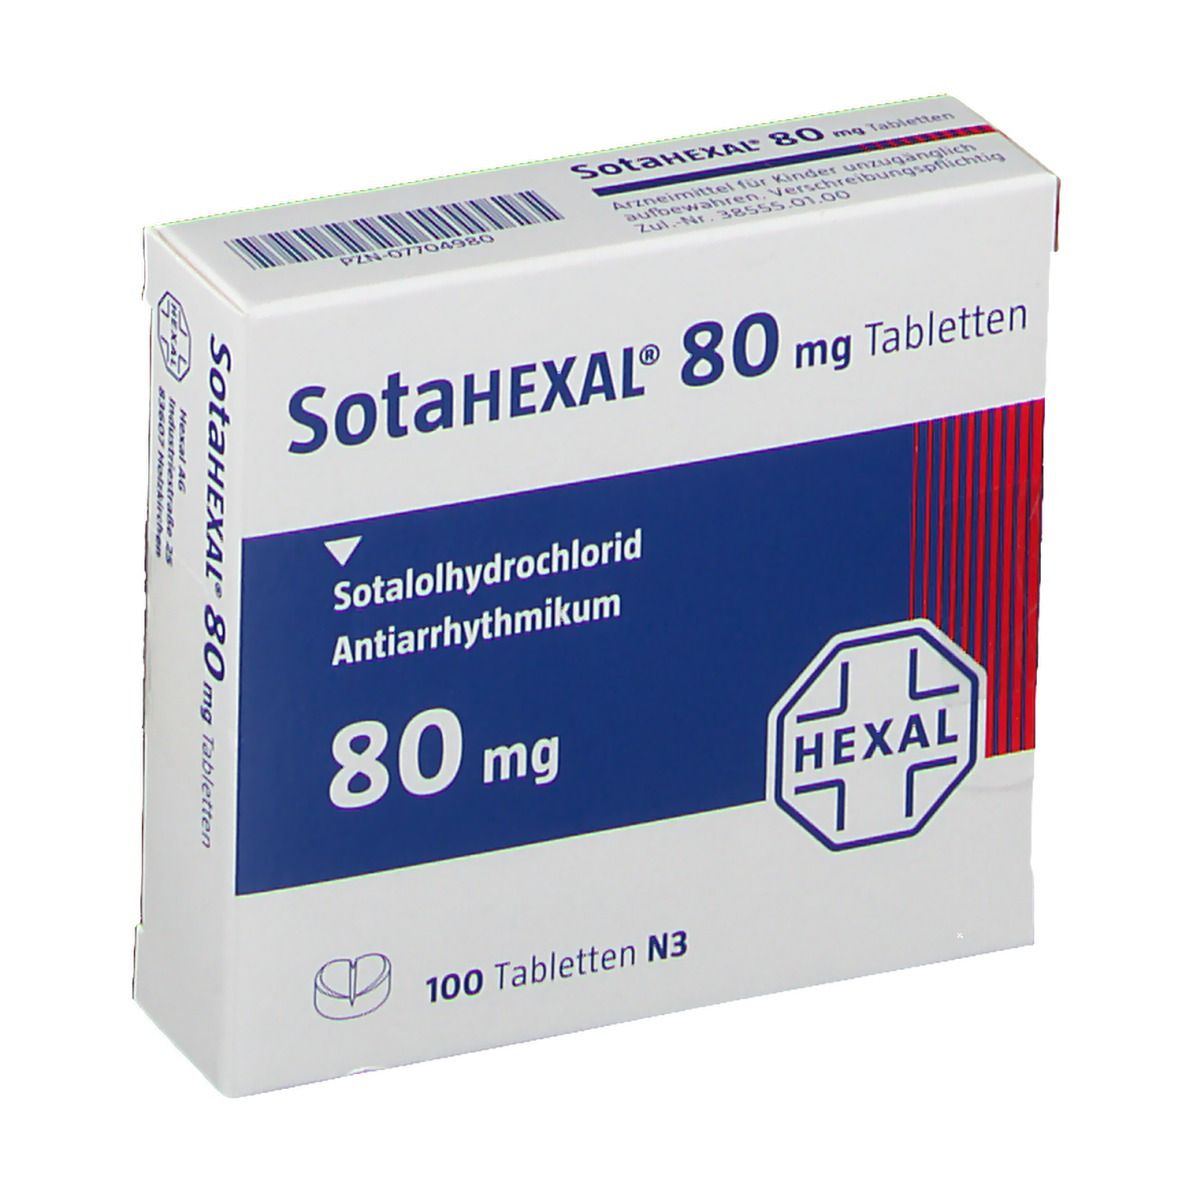 SotaHEXAL® 80 mg